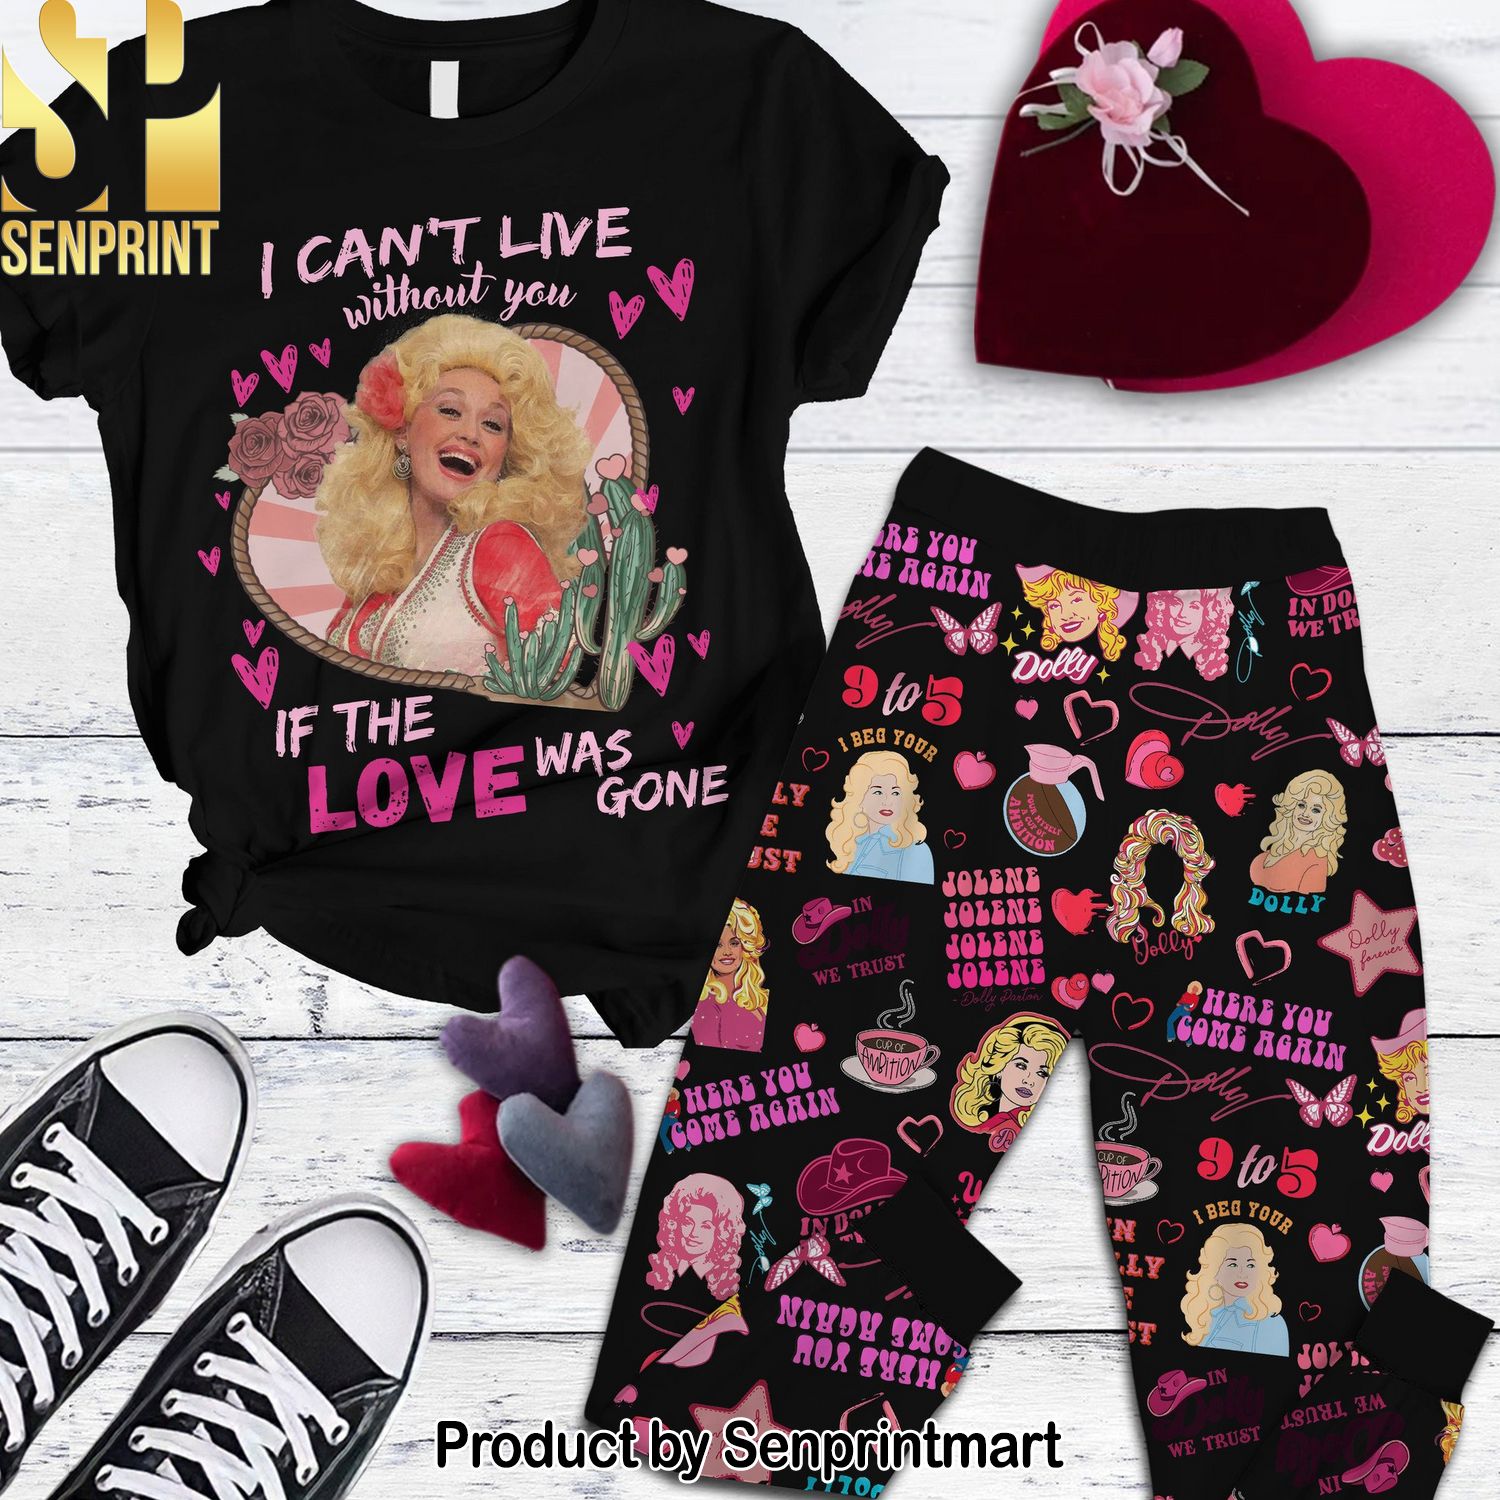 Dolly Parton Full Printing Unisex Pajama Sets